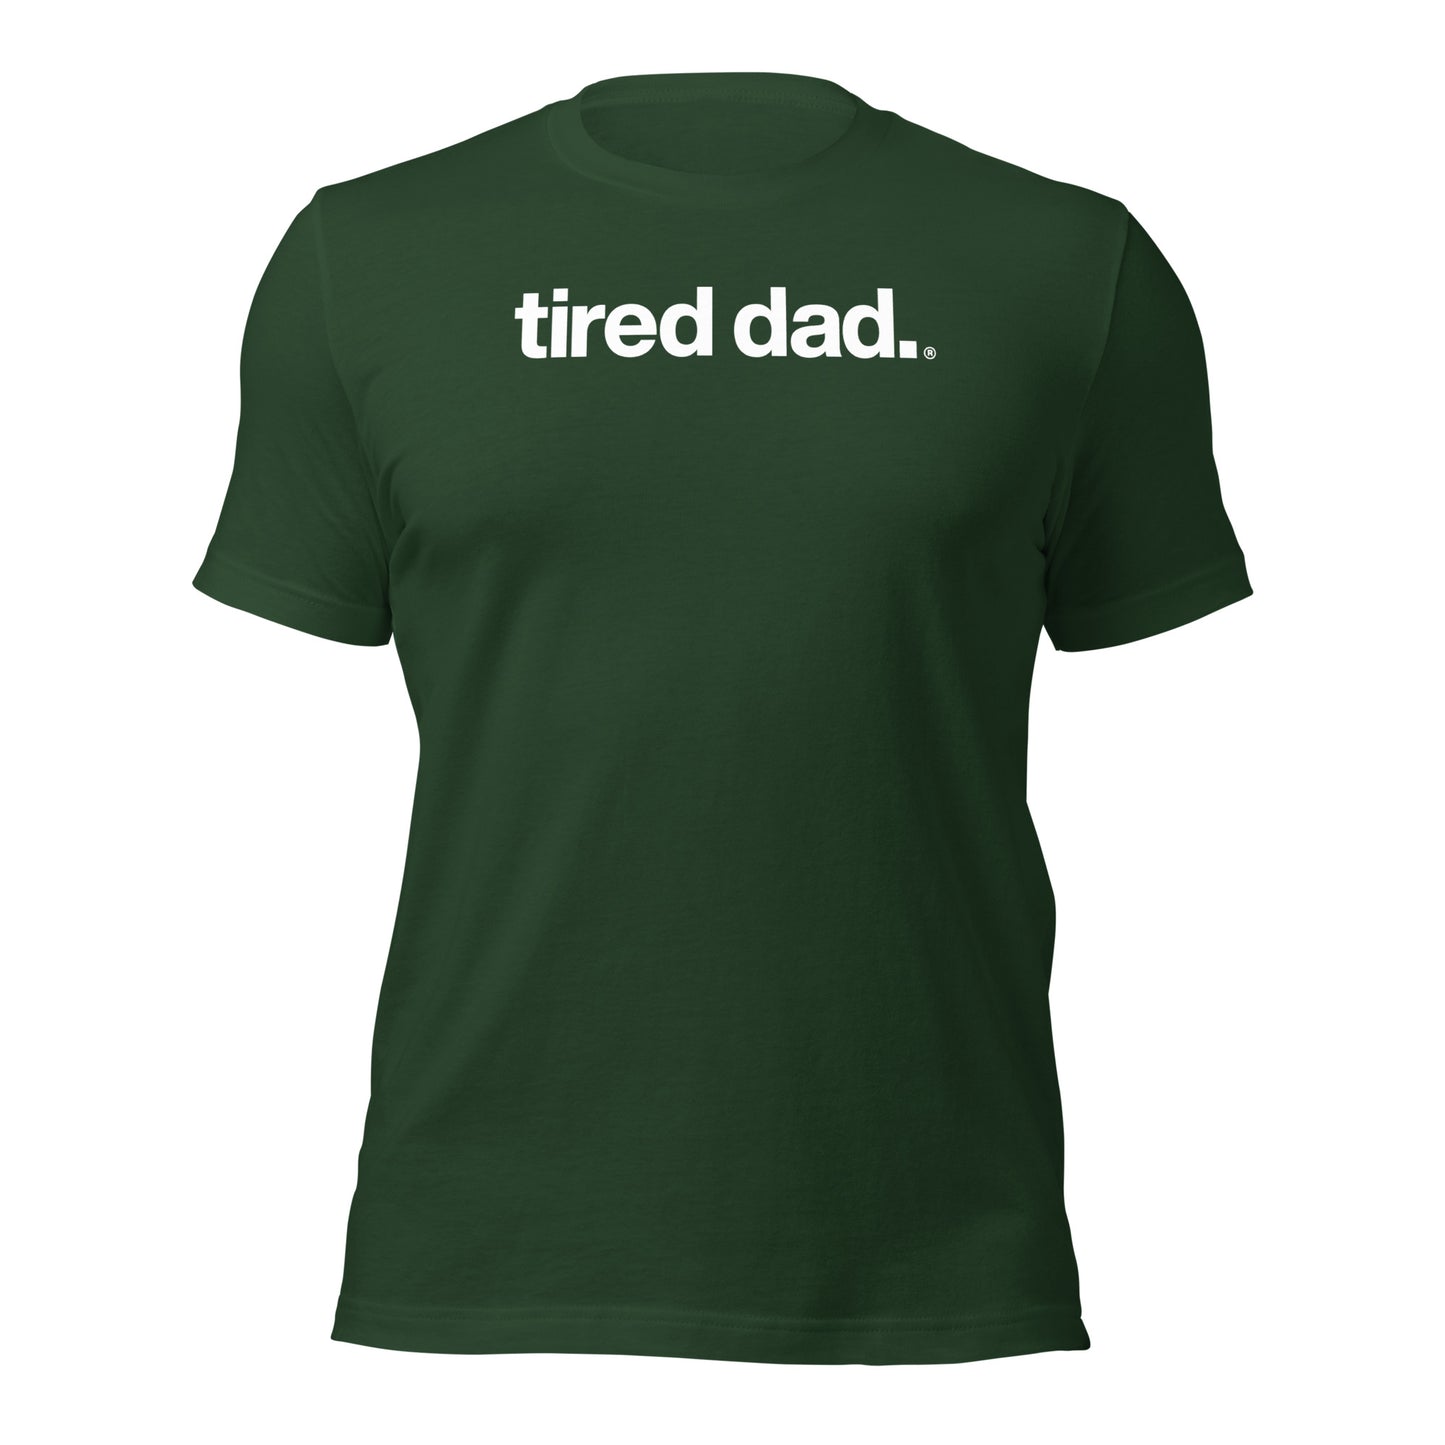 tired dad. shirt slim fit